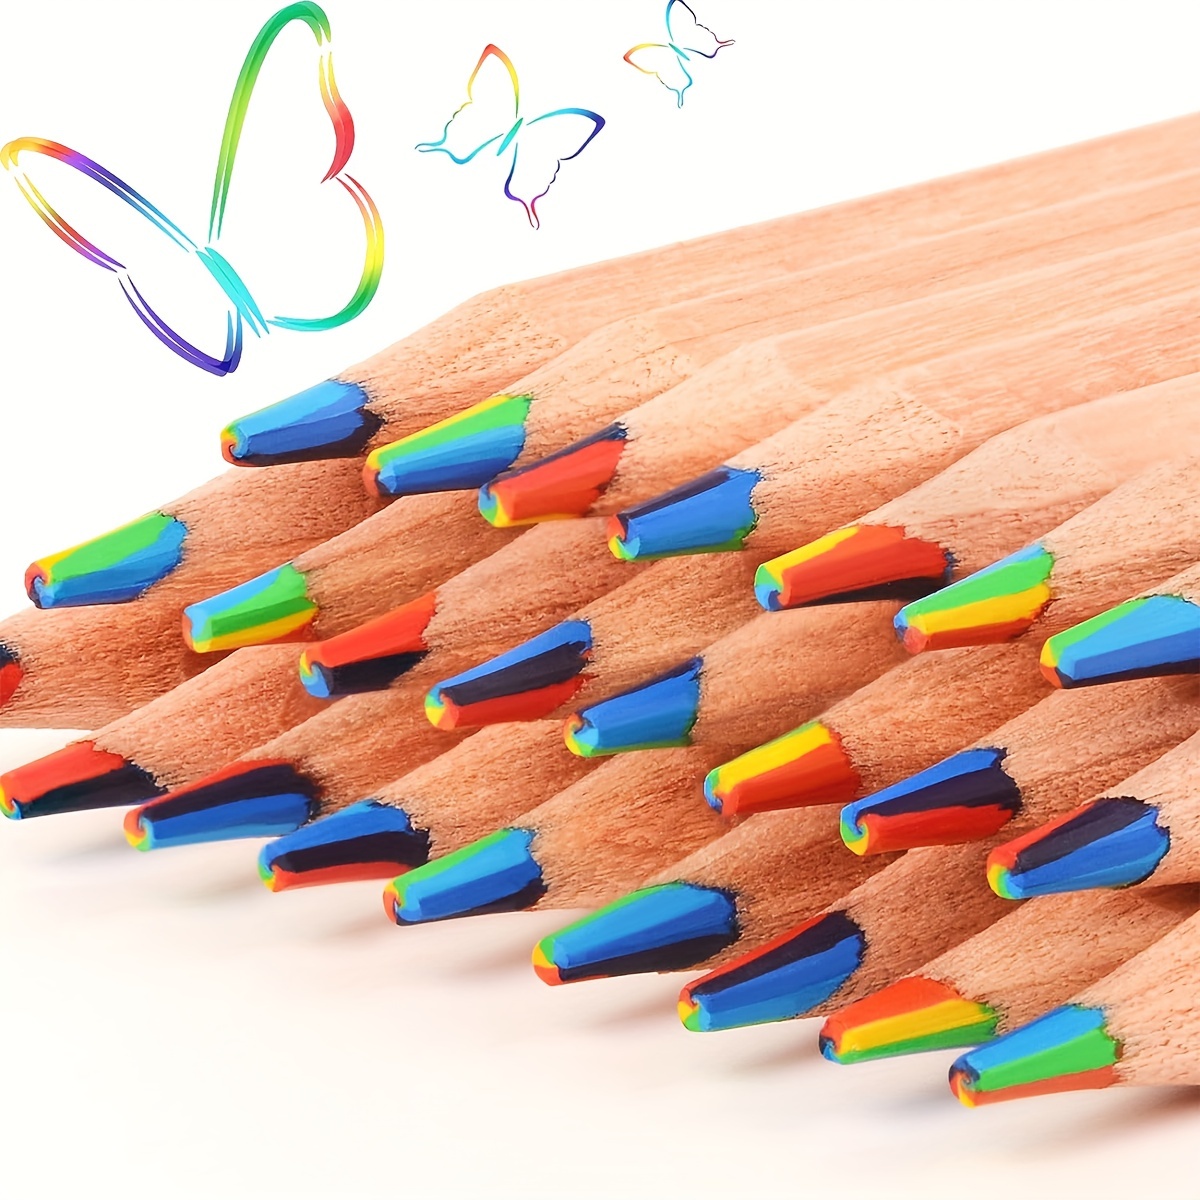 Brutfuner Colored Pencils, Round and Square Set Comparison